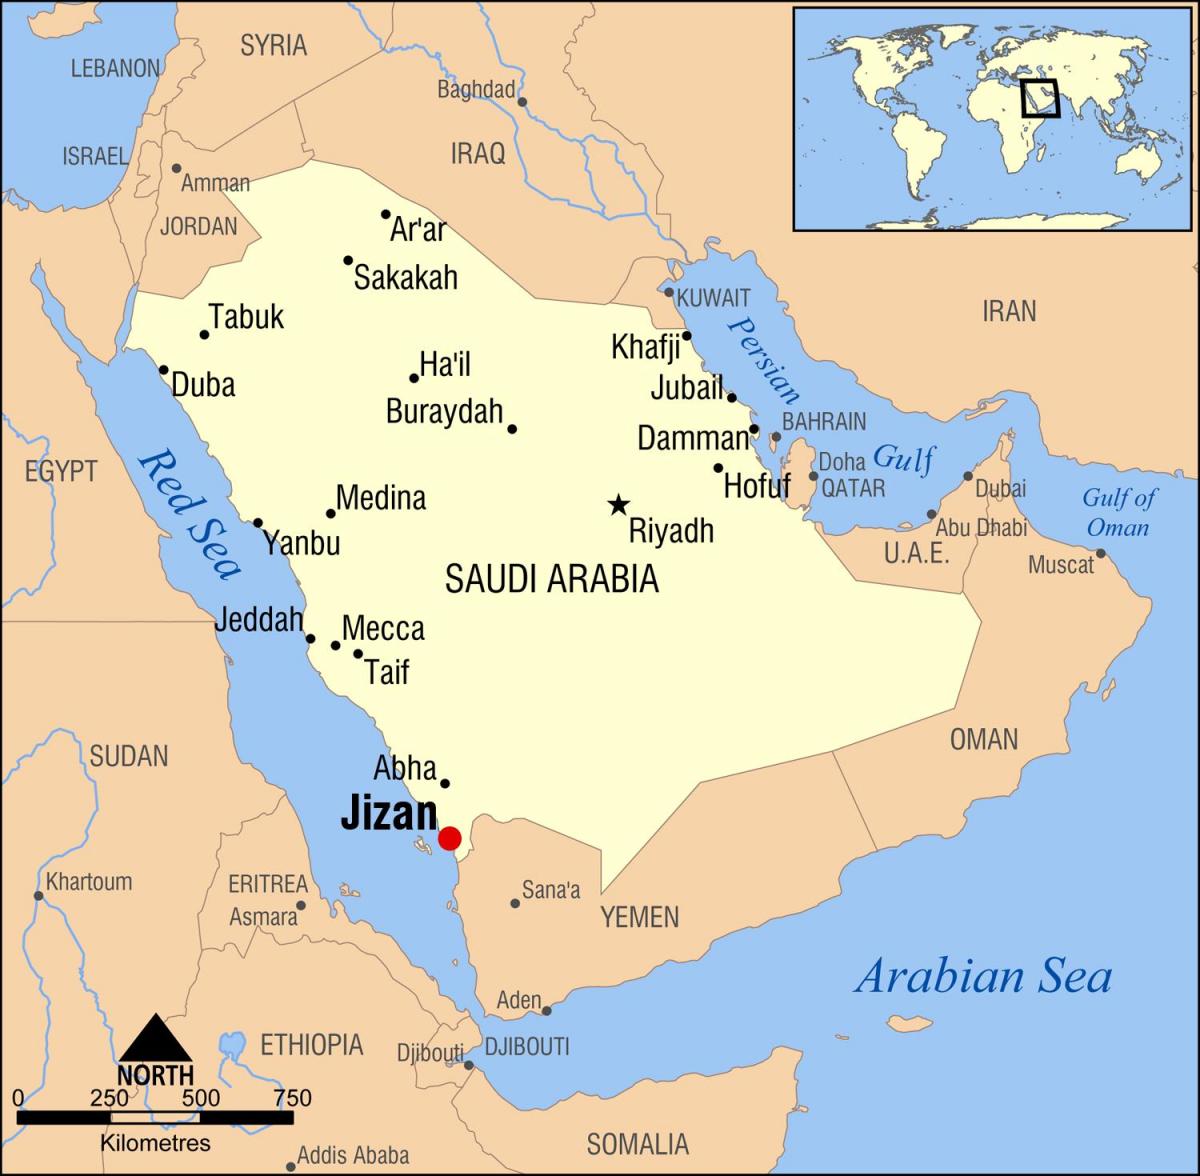 jizan KSA地図